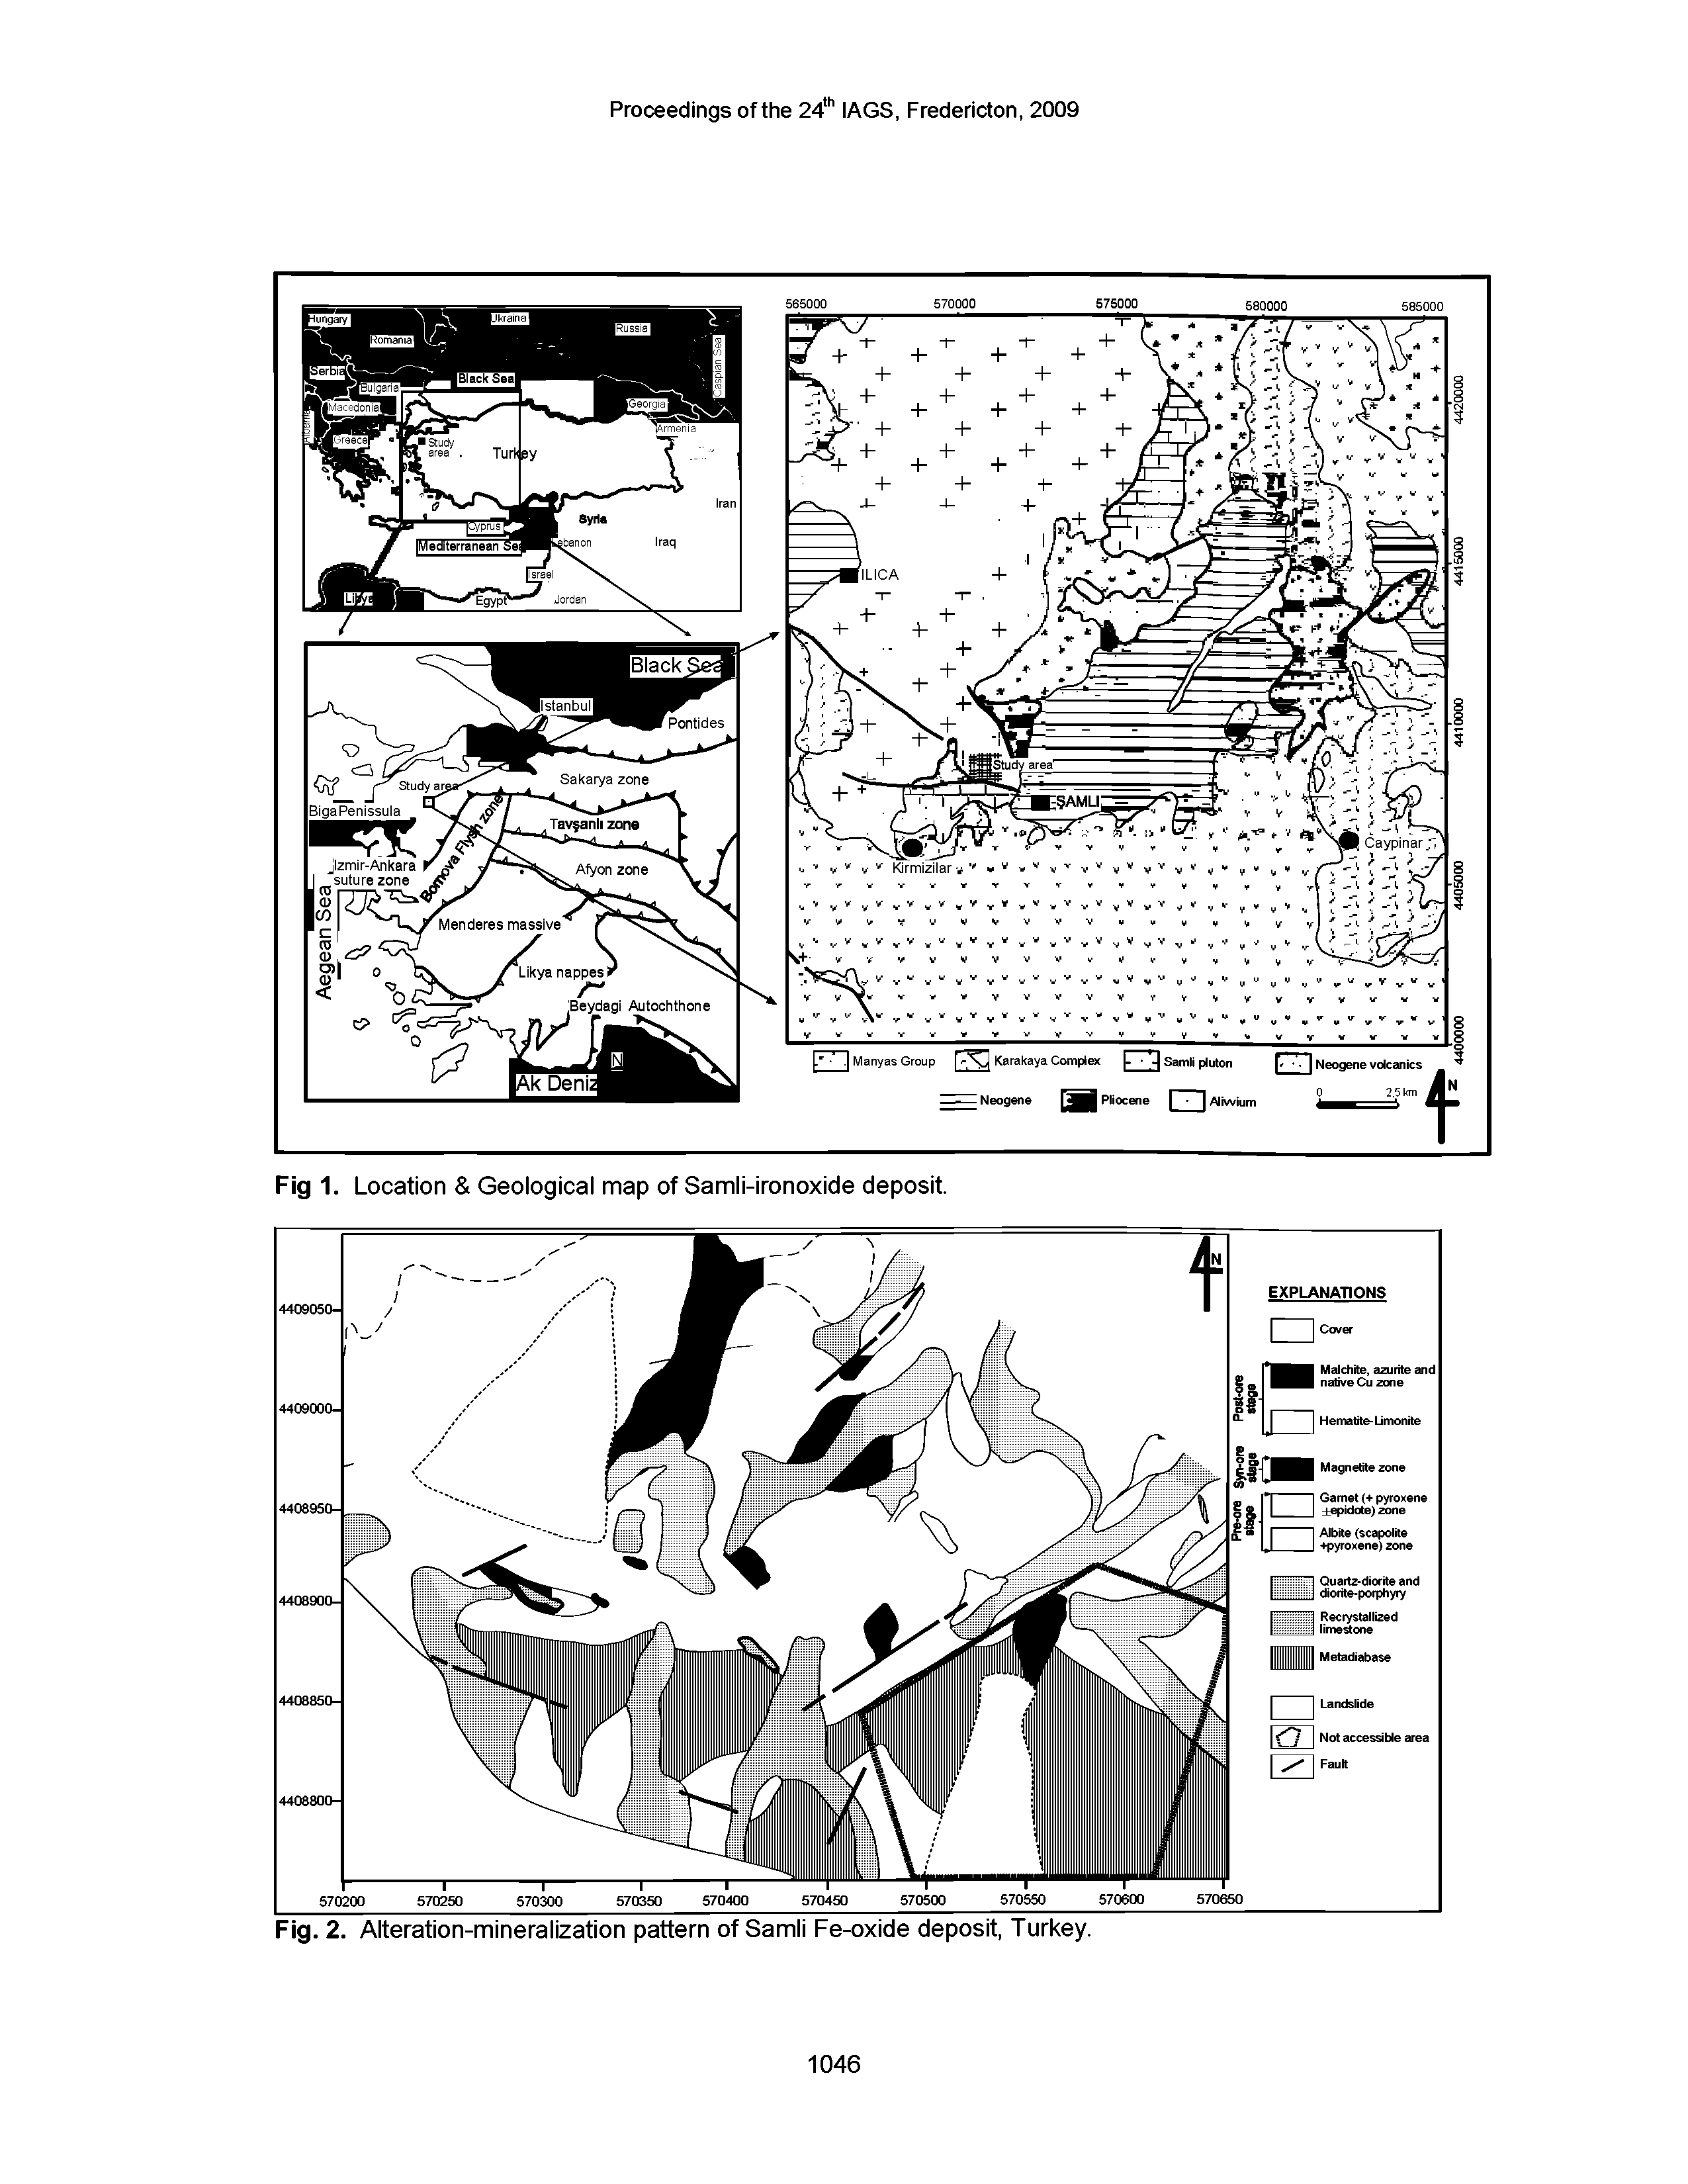 Fig. 2. Alteration-mineralization pattern of Samli Fe-oxide deposit, Turkey.